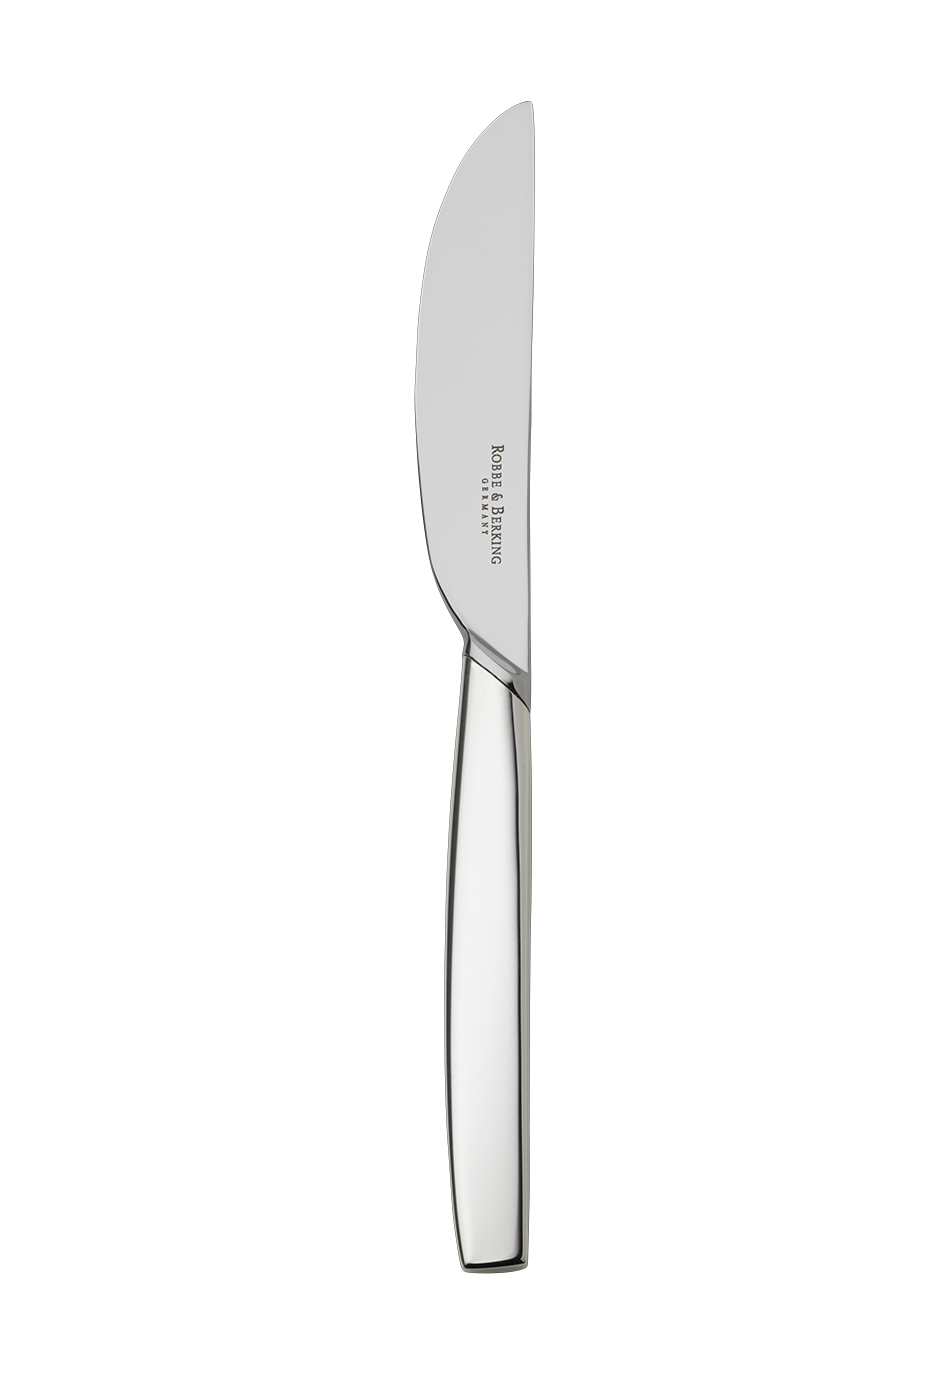 12" Menu Knife (150g massive silverplated)